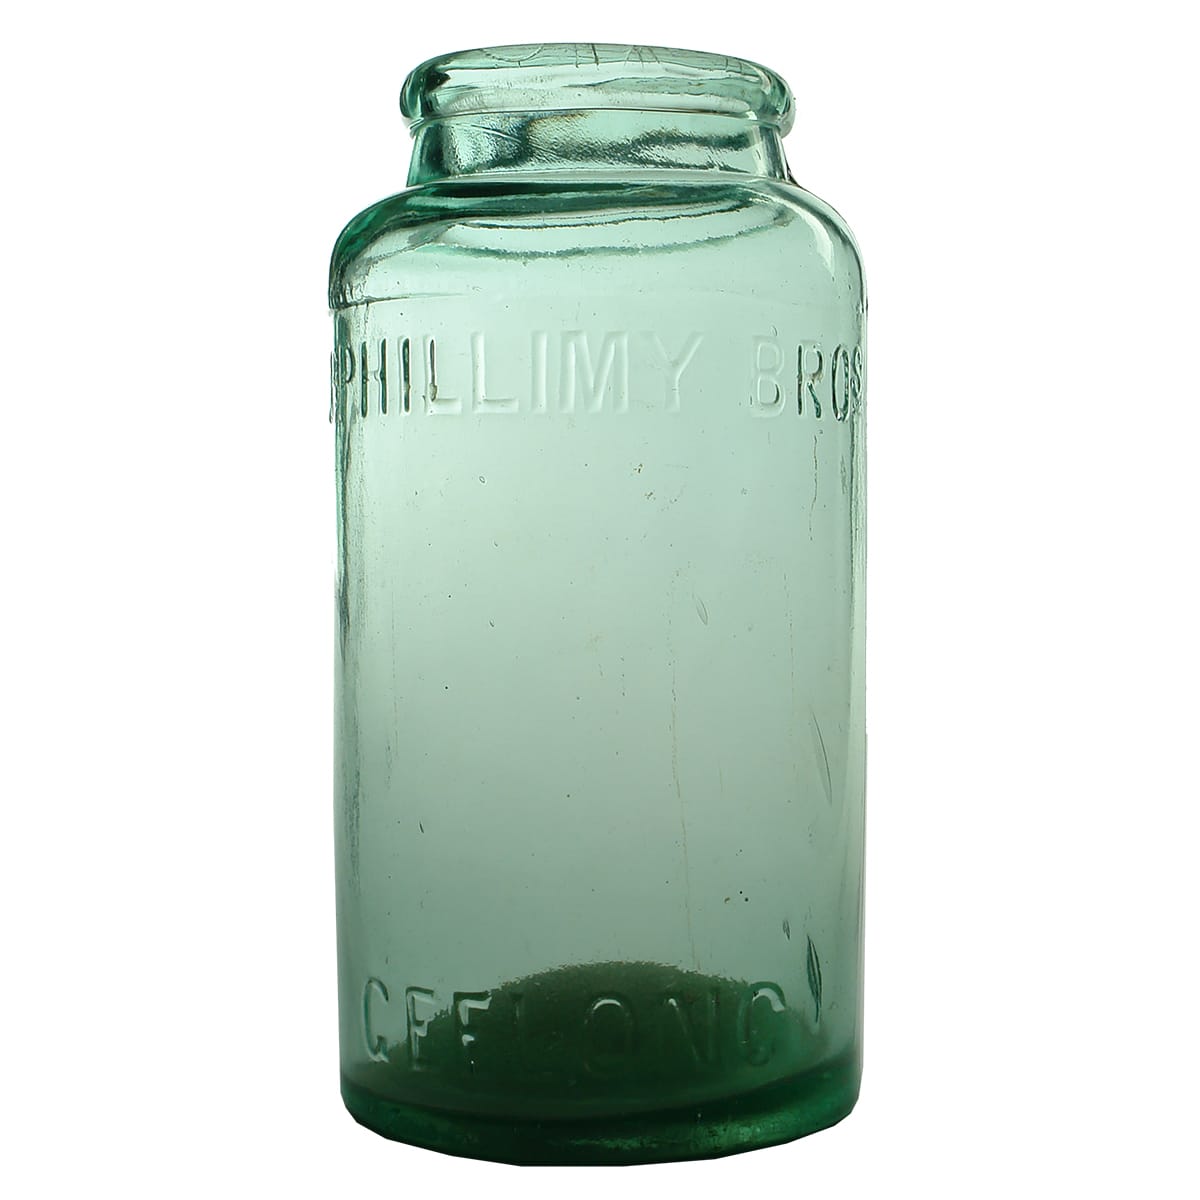 Lolly Jar. McPhillimy Bros, Geelong. Aqua. 1 Gallon. (Victoria)